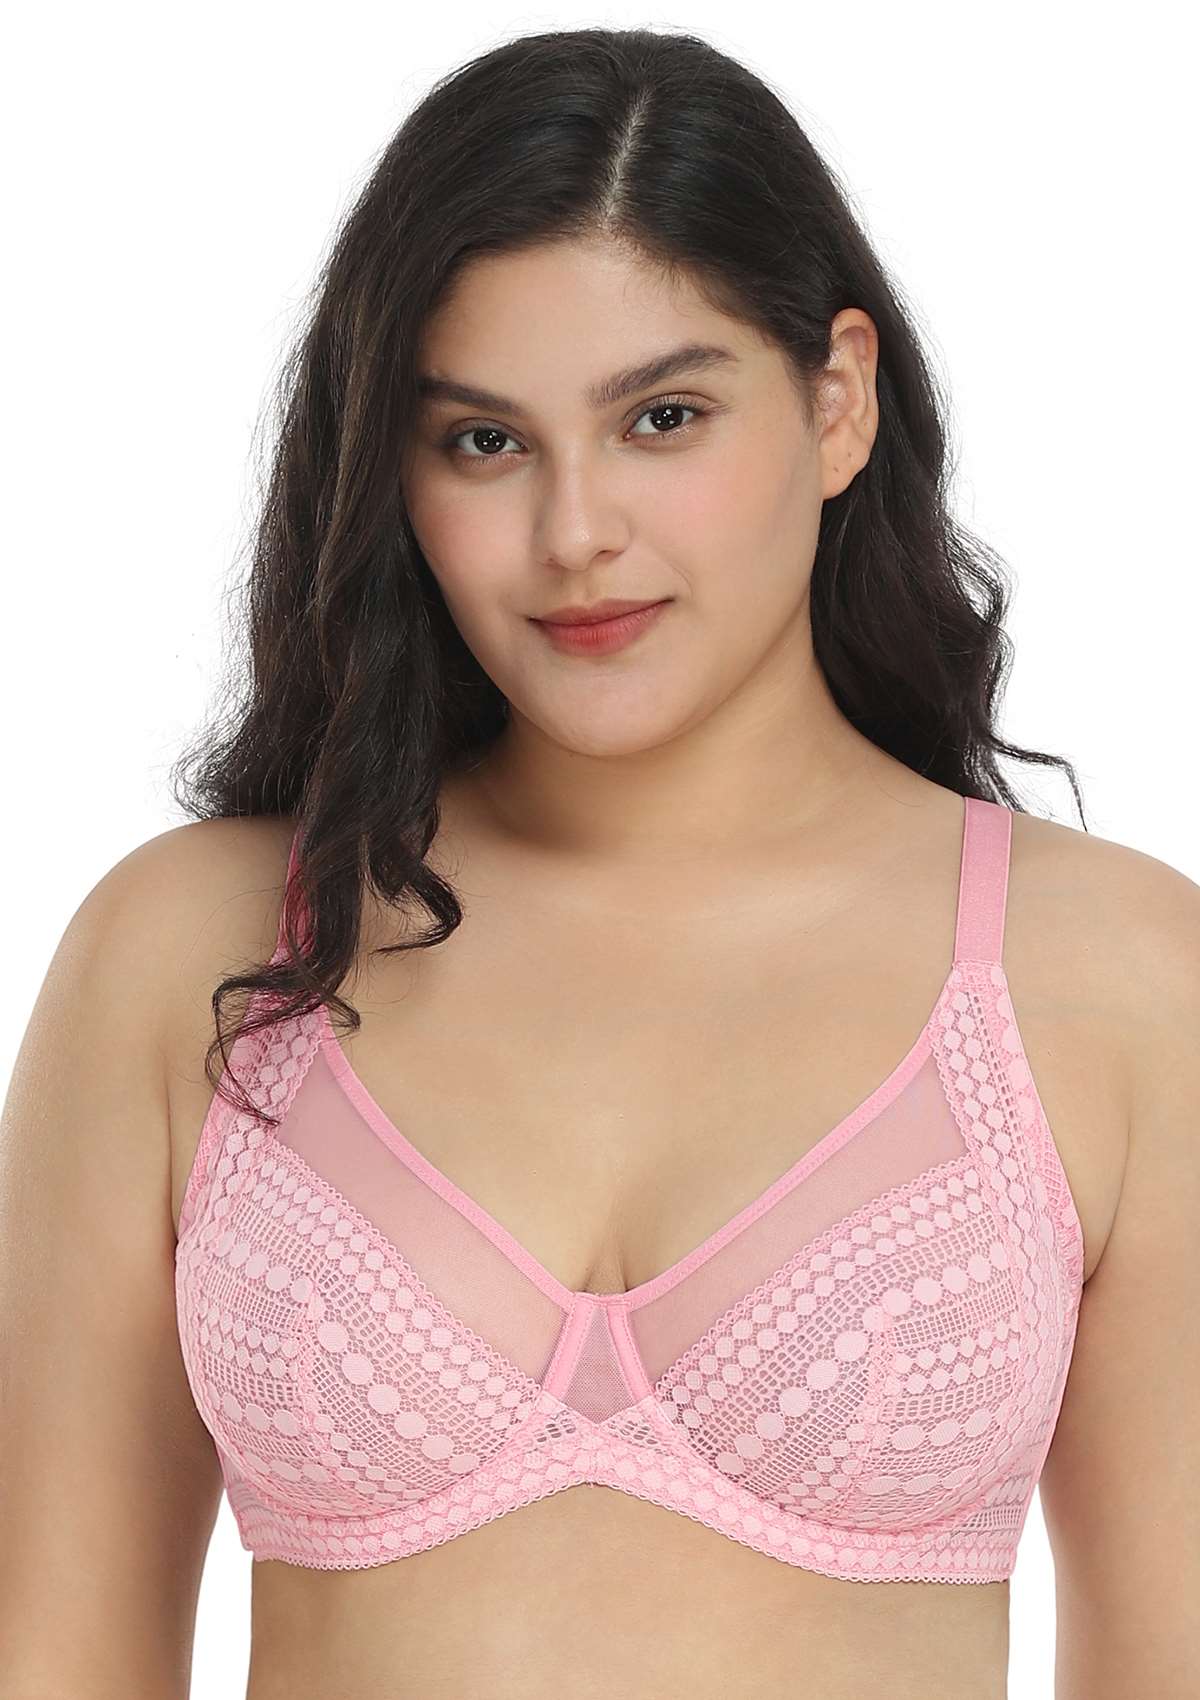 HSIA Heroine Lace Unlined Bra: Bra That Hides Back Fat - Plus Size - Pink / 44 / DD/E